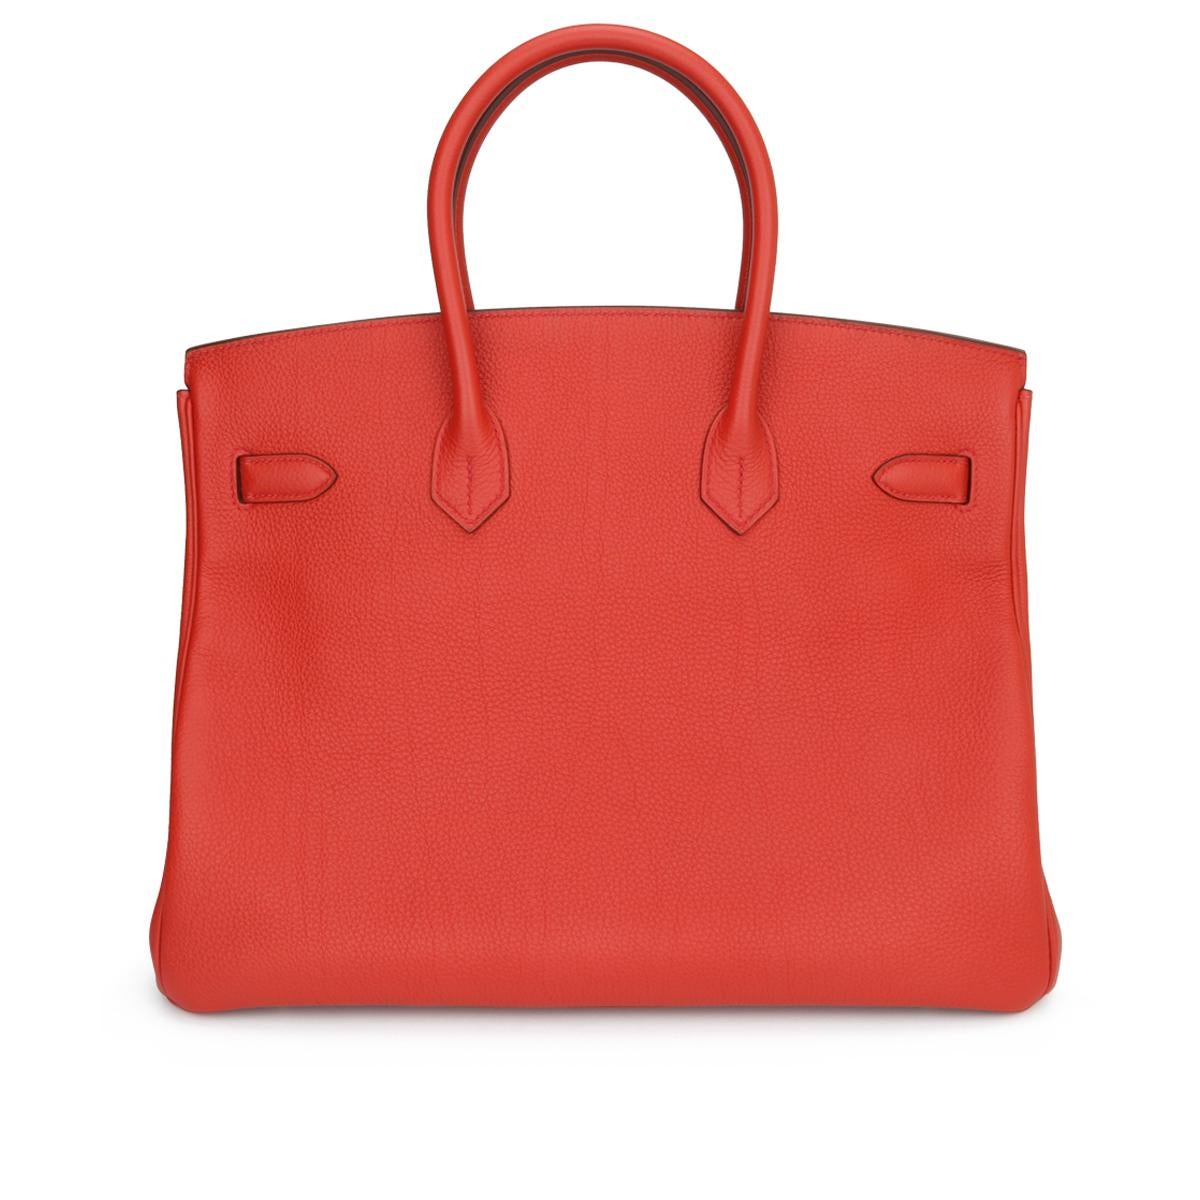 Red Hermès Birkin Bag 35cm Geranium Togo Leather with Gold Hardware Stamp A 2017